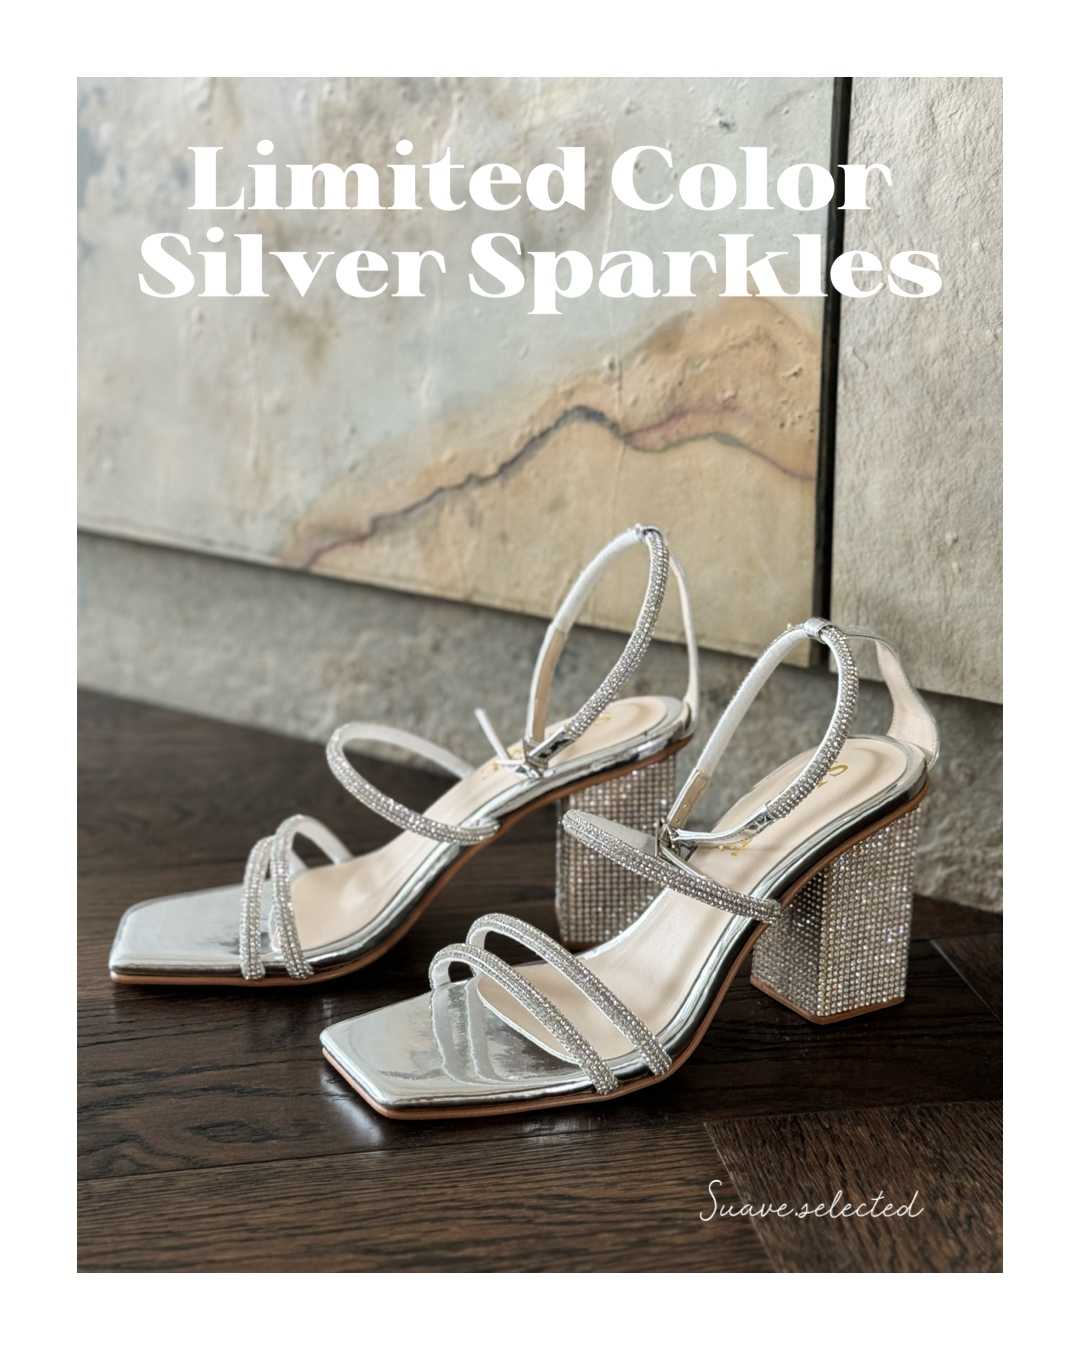 Suave0020-Nichole Diamond heels